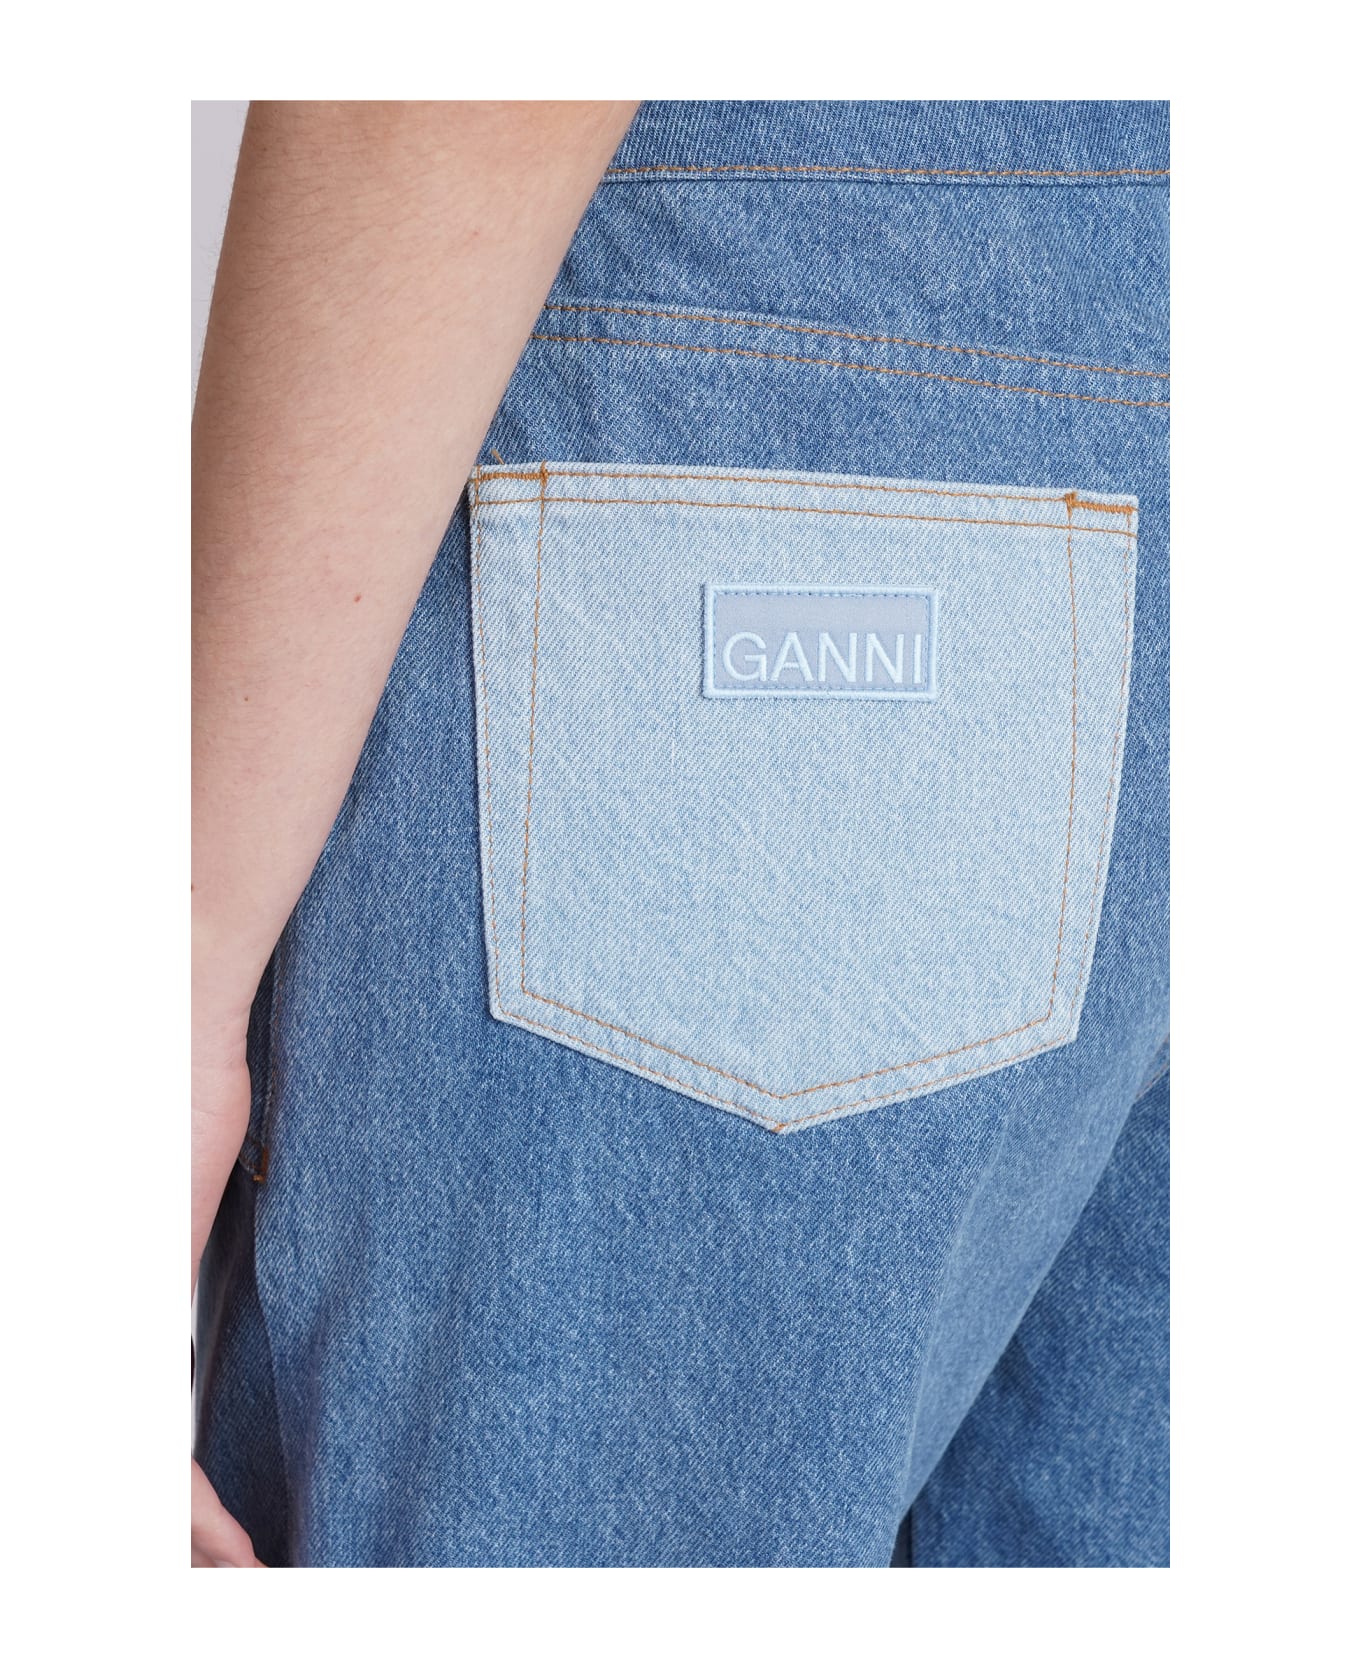 Ganni Jeans In Blue Cotton - MID BLUE VINTAGE デニム